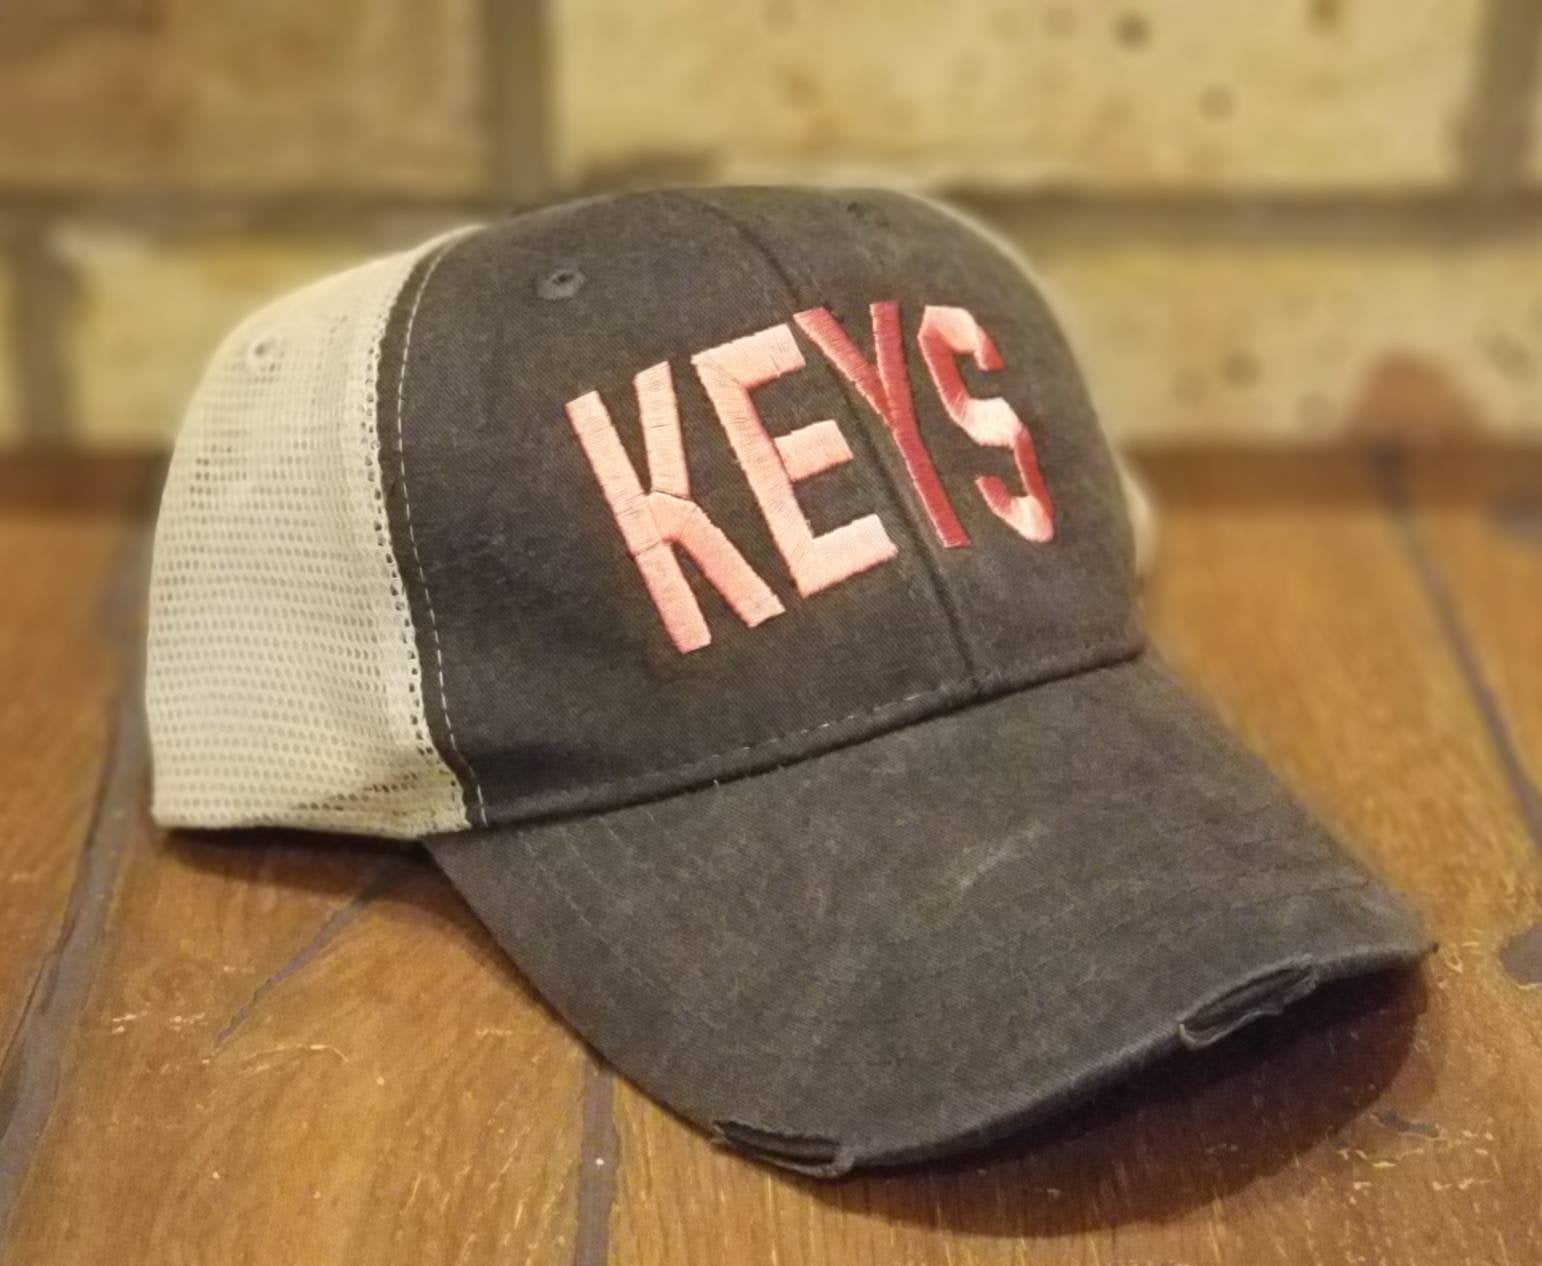 KEYS Embroidered Hat - Airport Code Florida Keys Hat, FL Personalized Trucker Hat, Summer Vacation, Beach, Spring Break, Ocean Trip Cap